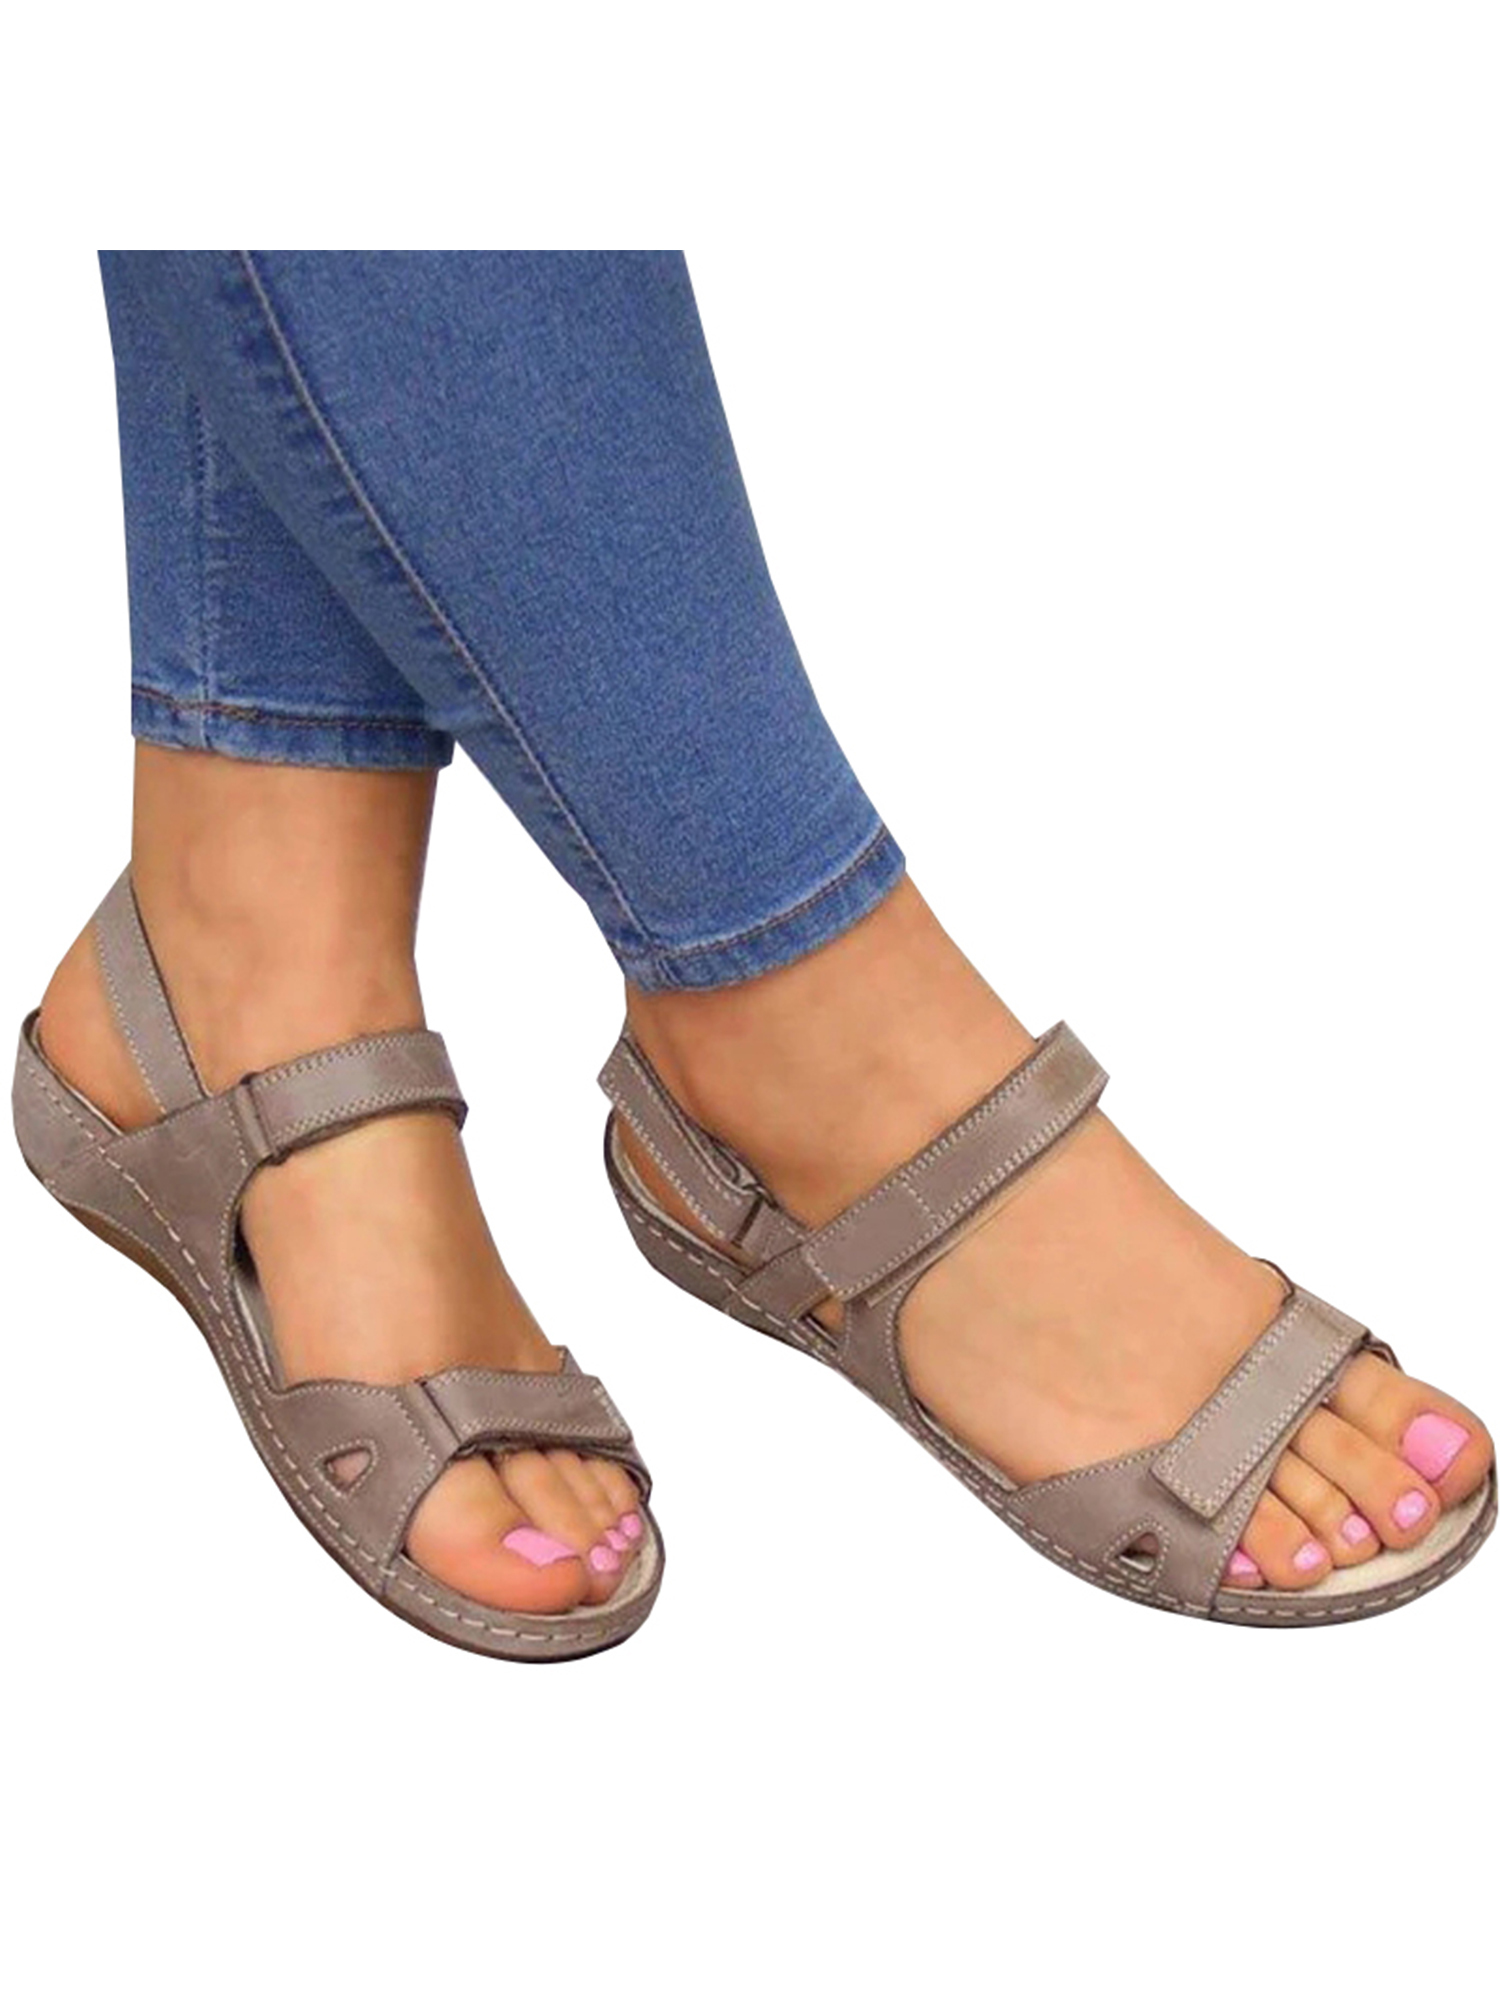 Womens Summer Boho Flip Flops Sandal Cross T Strap Thong Flat Casual Shoes Size - image 1 of 2